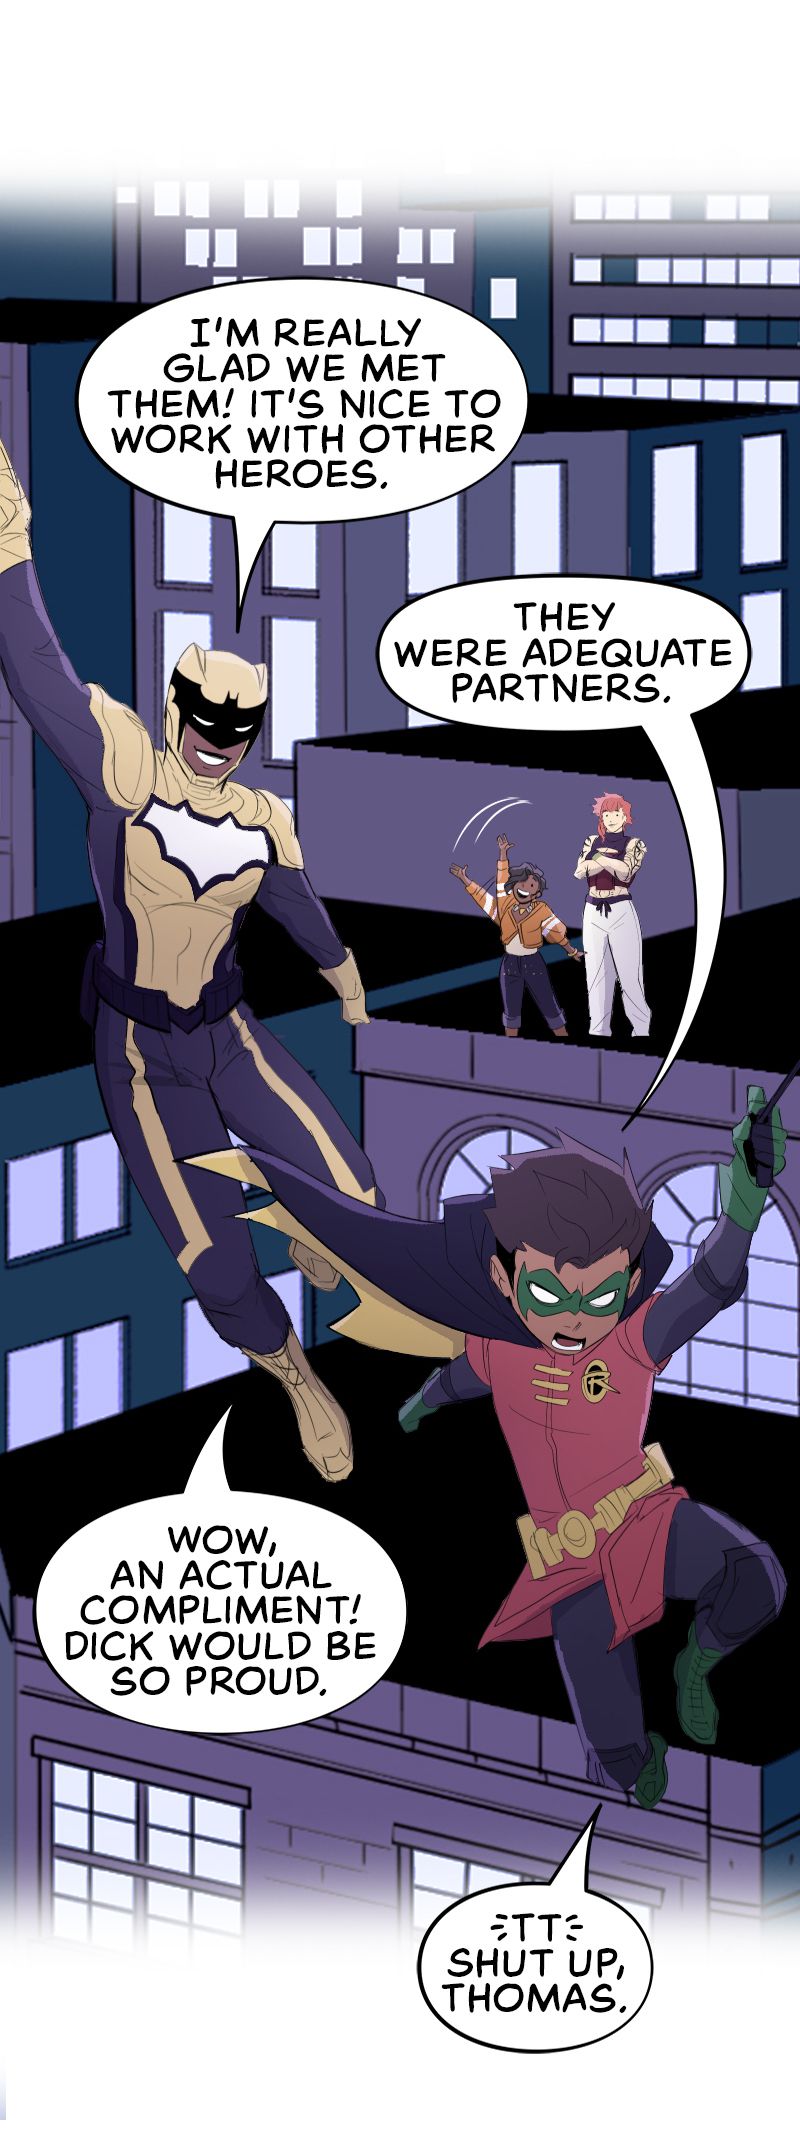 Duke allegramente e Damian, burbero, salutano Vixen e la sua amica in Batman: Wayne Family Adventures.